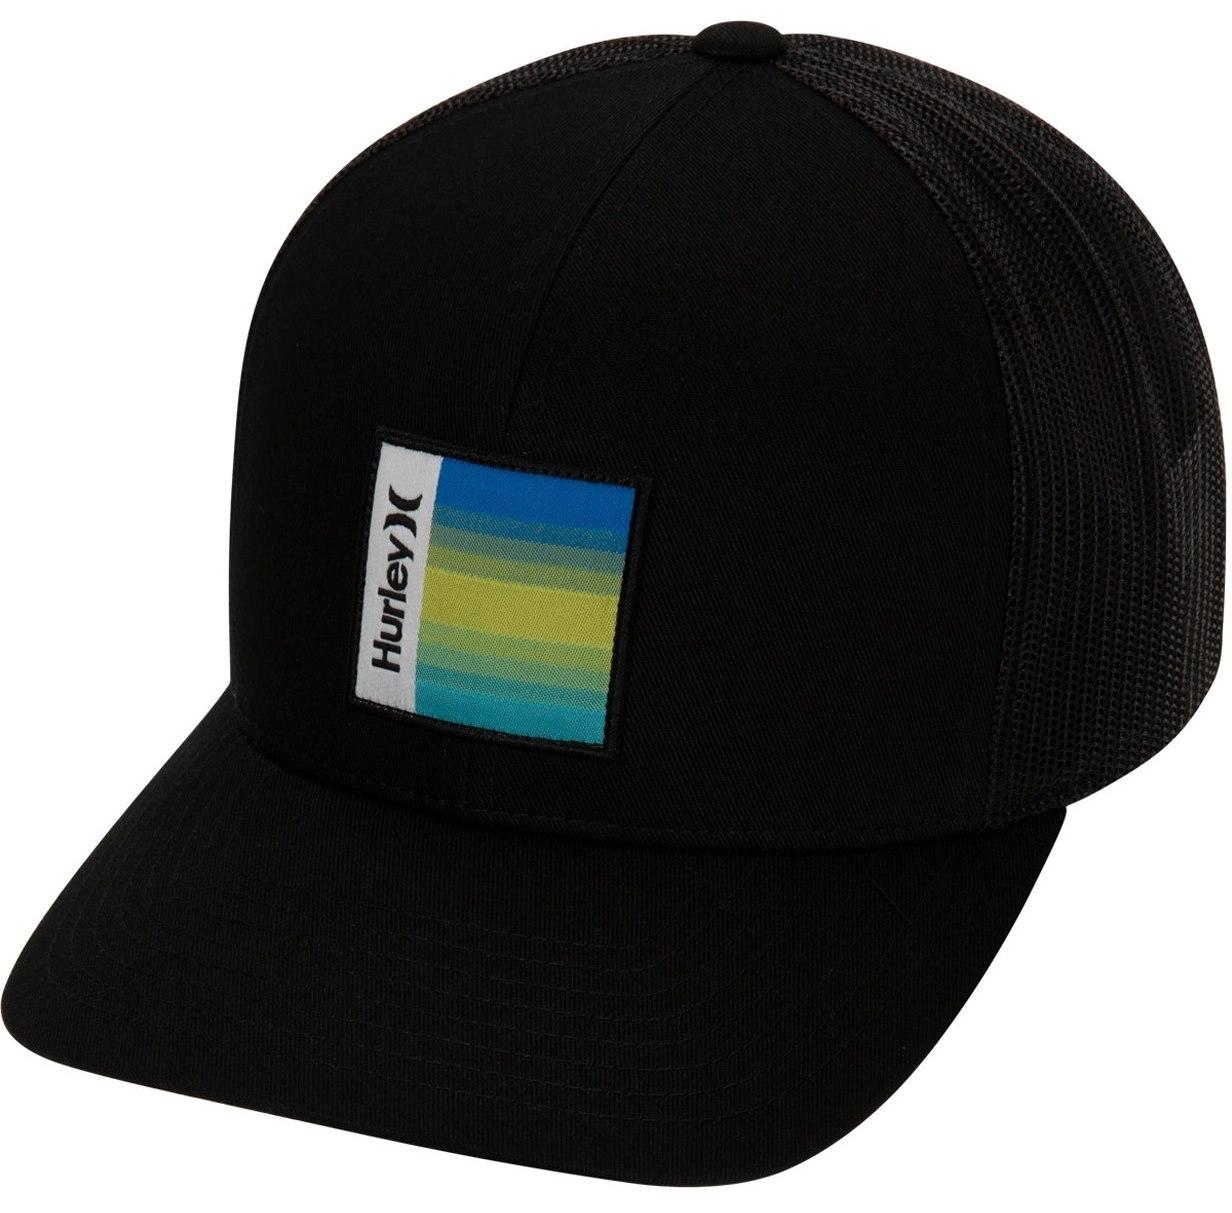  Seacliff Snapback Hat - Black